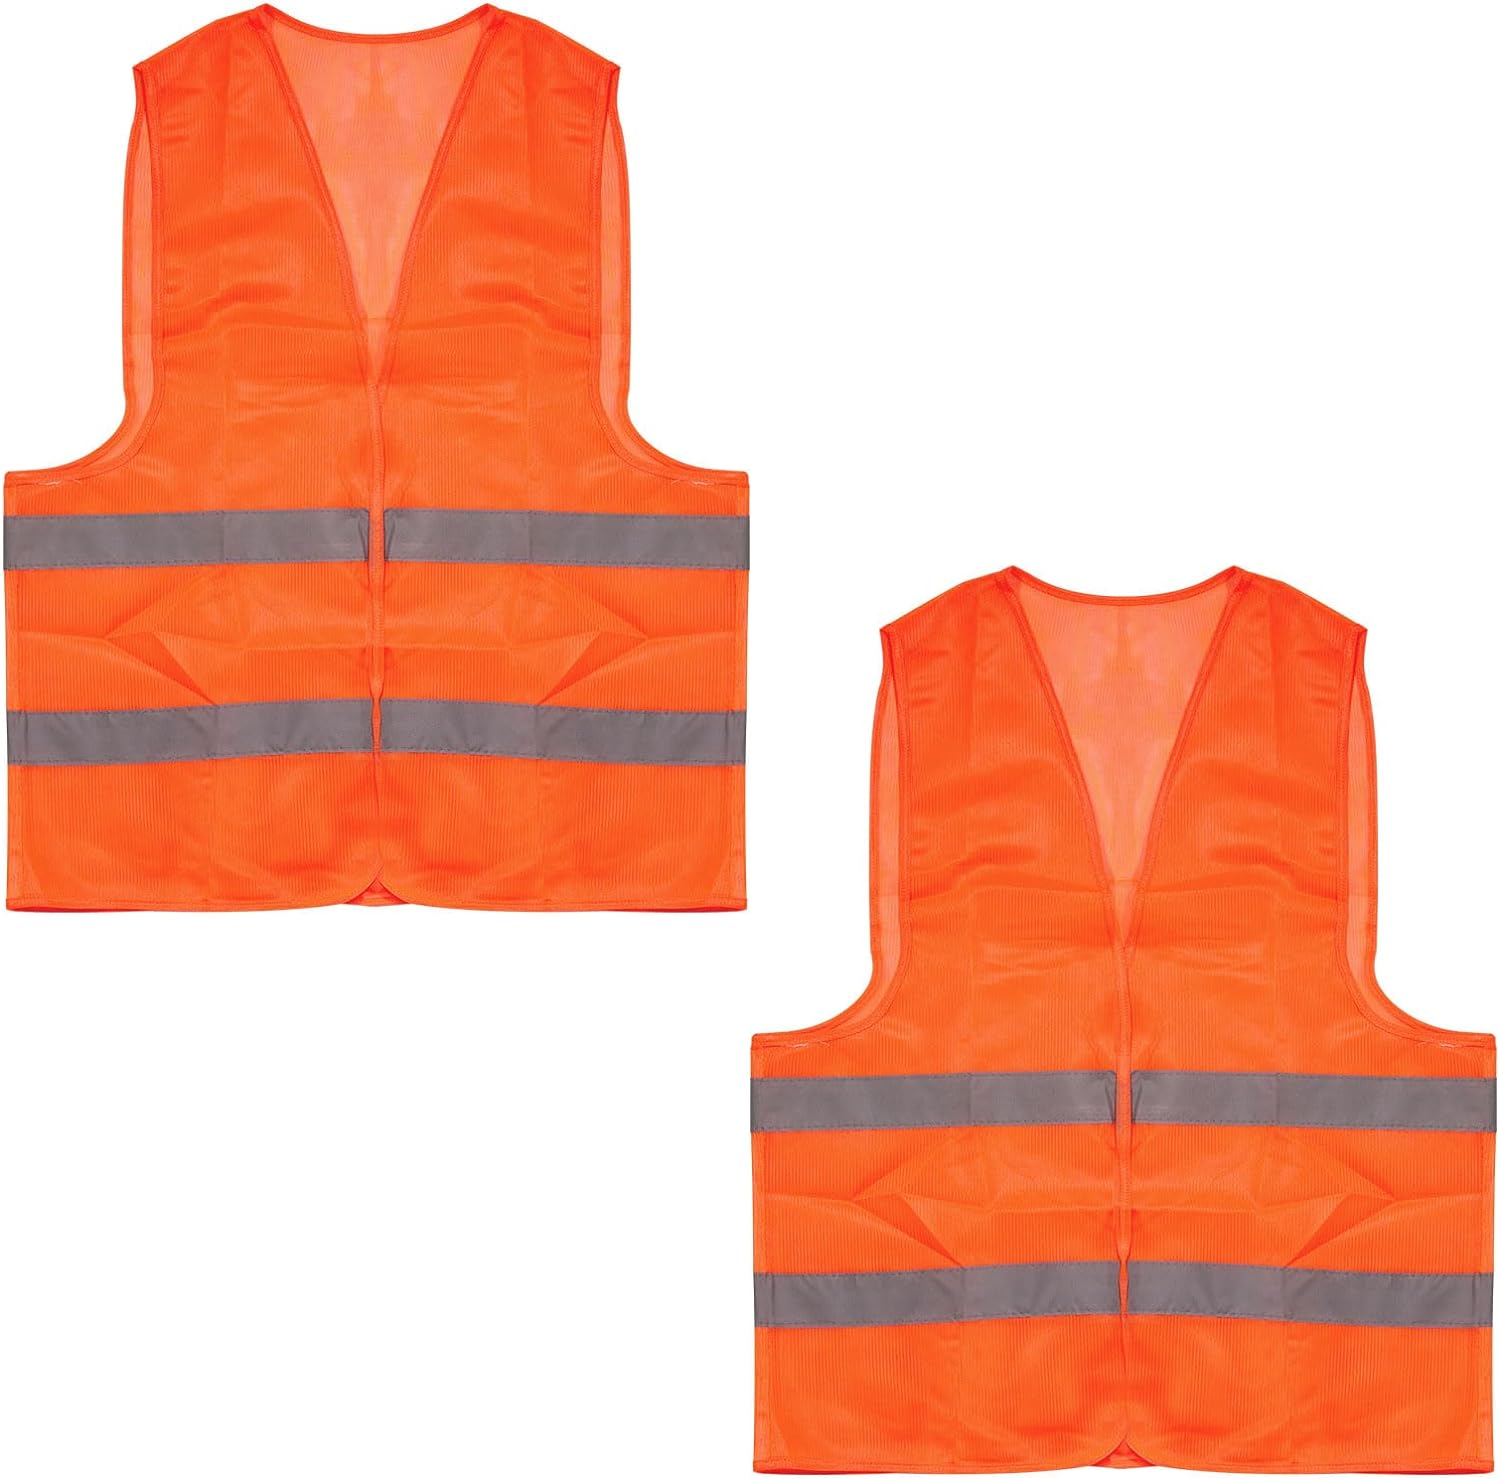 Cheerhom Reflective Car Vest, Set of 2, Car Safety Vest, Orange, Safety Vests for Adults, 2 High Visibility Vest for Drivers, Workers